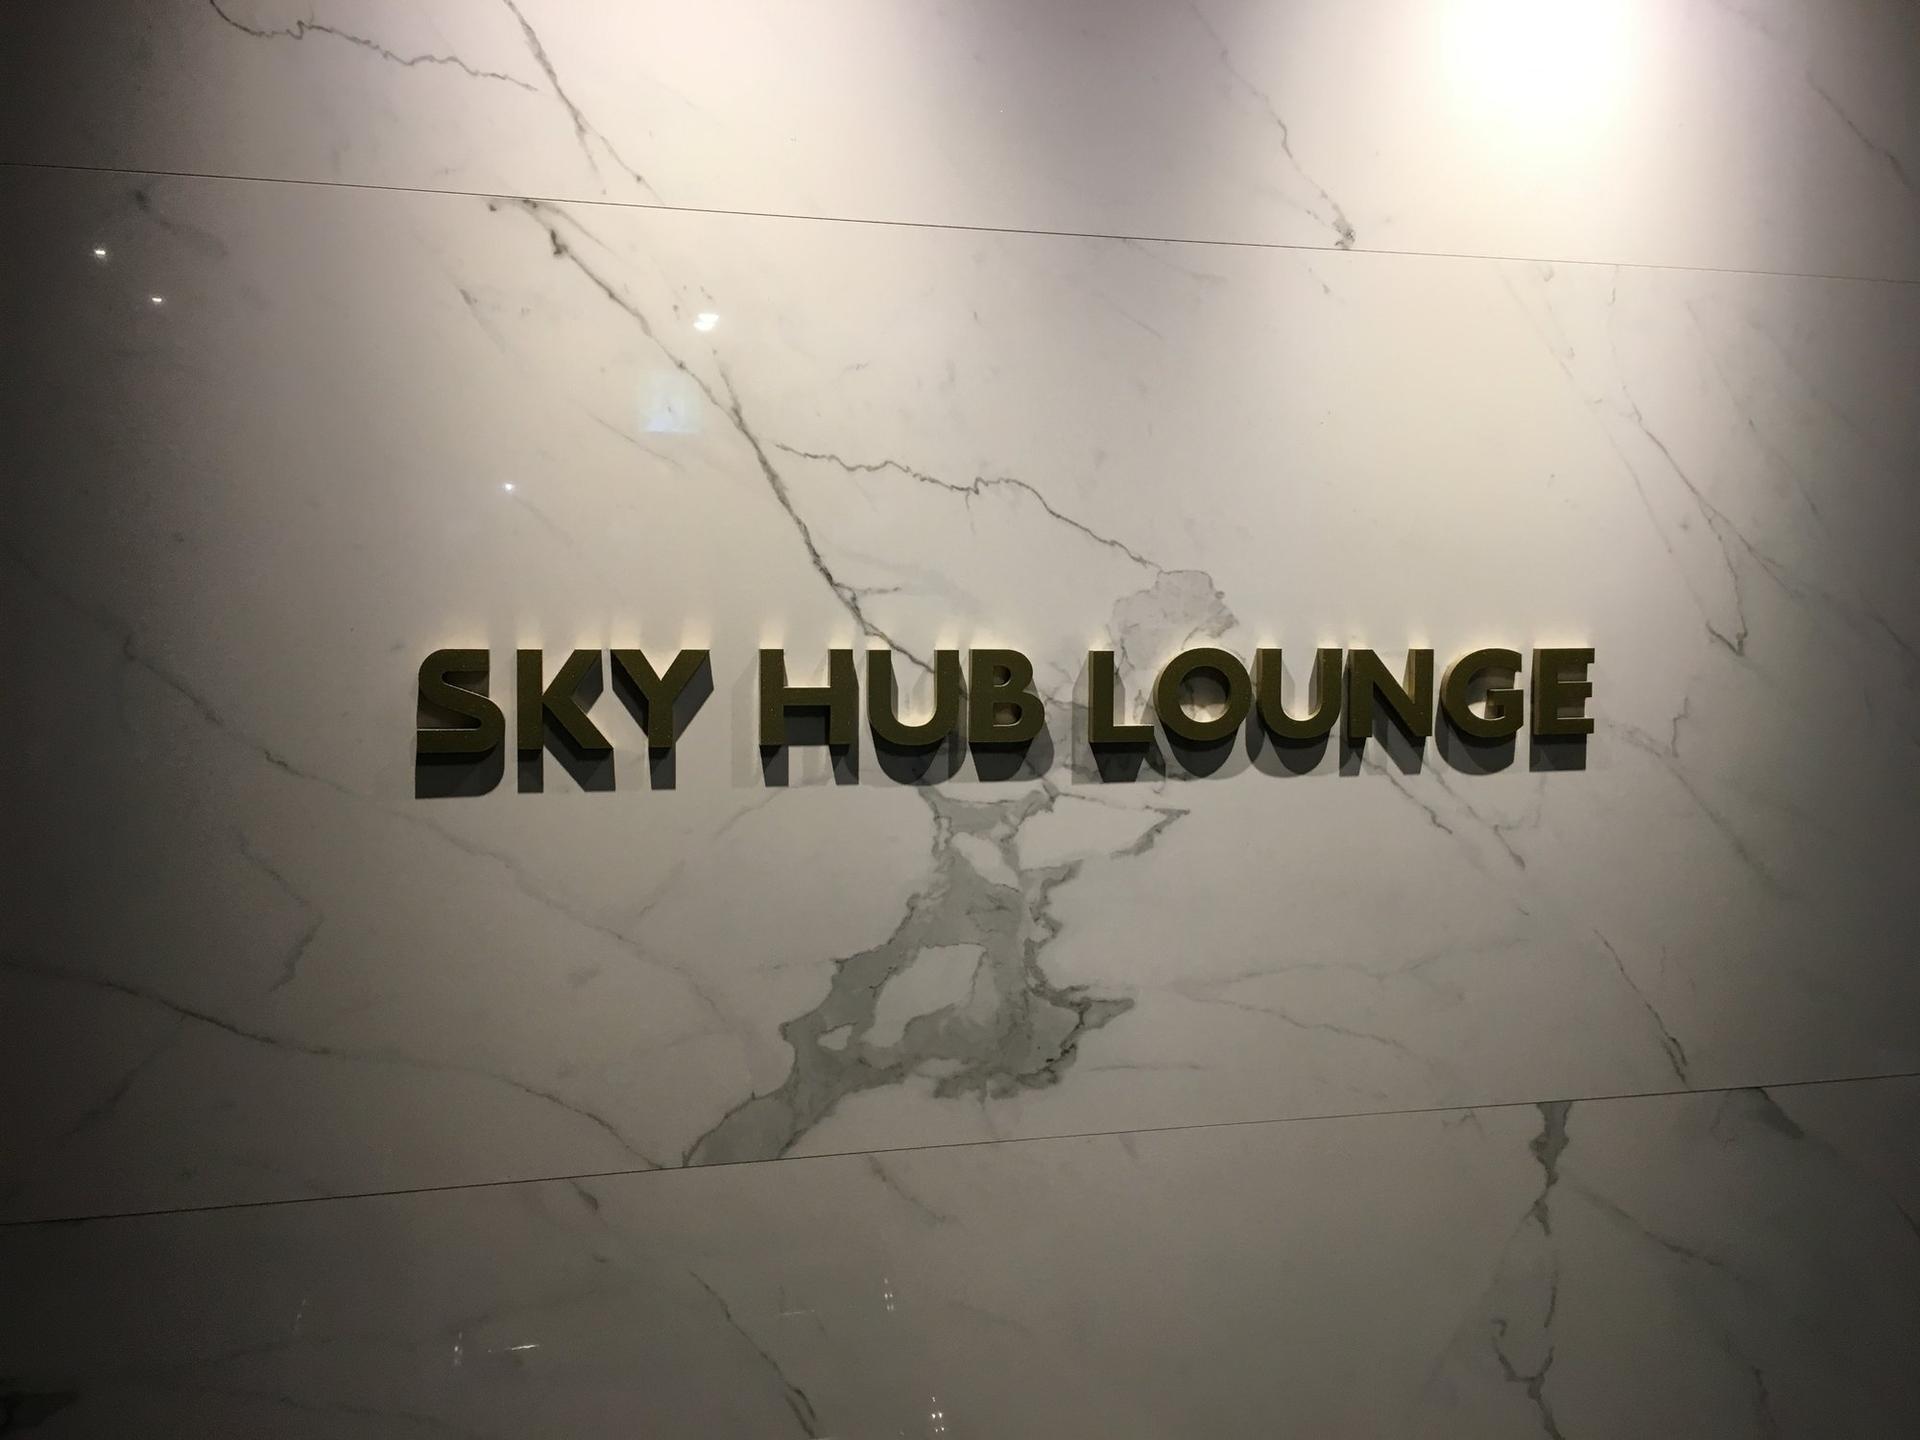 Sky Hub Lounge West image 30 of 30